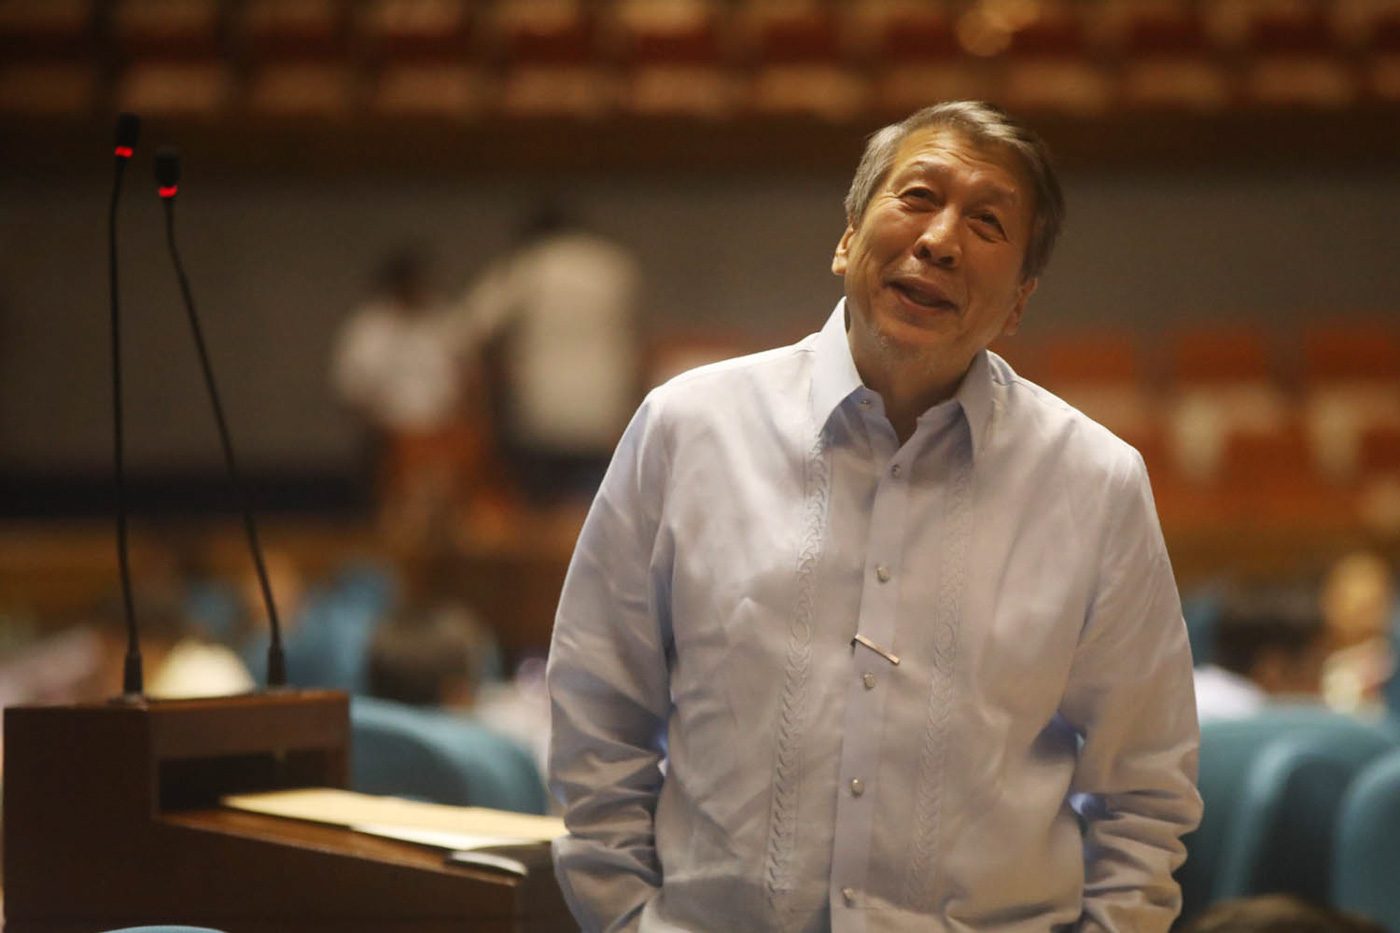 Rudy Fariñas runs for Ilocos Norte governor vs Marcos’ grandson